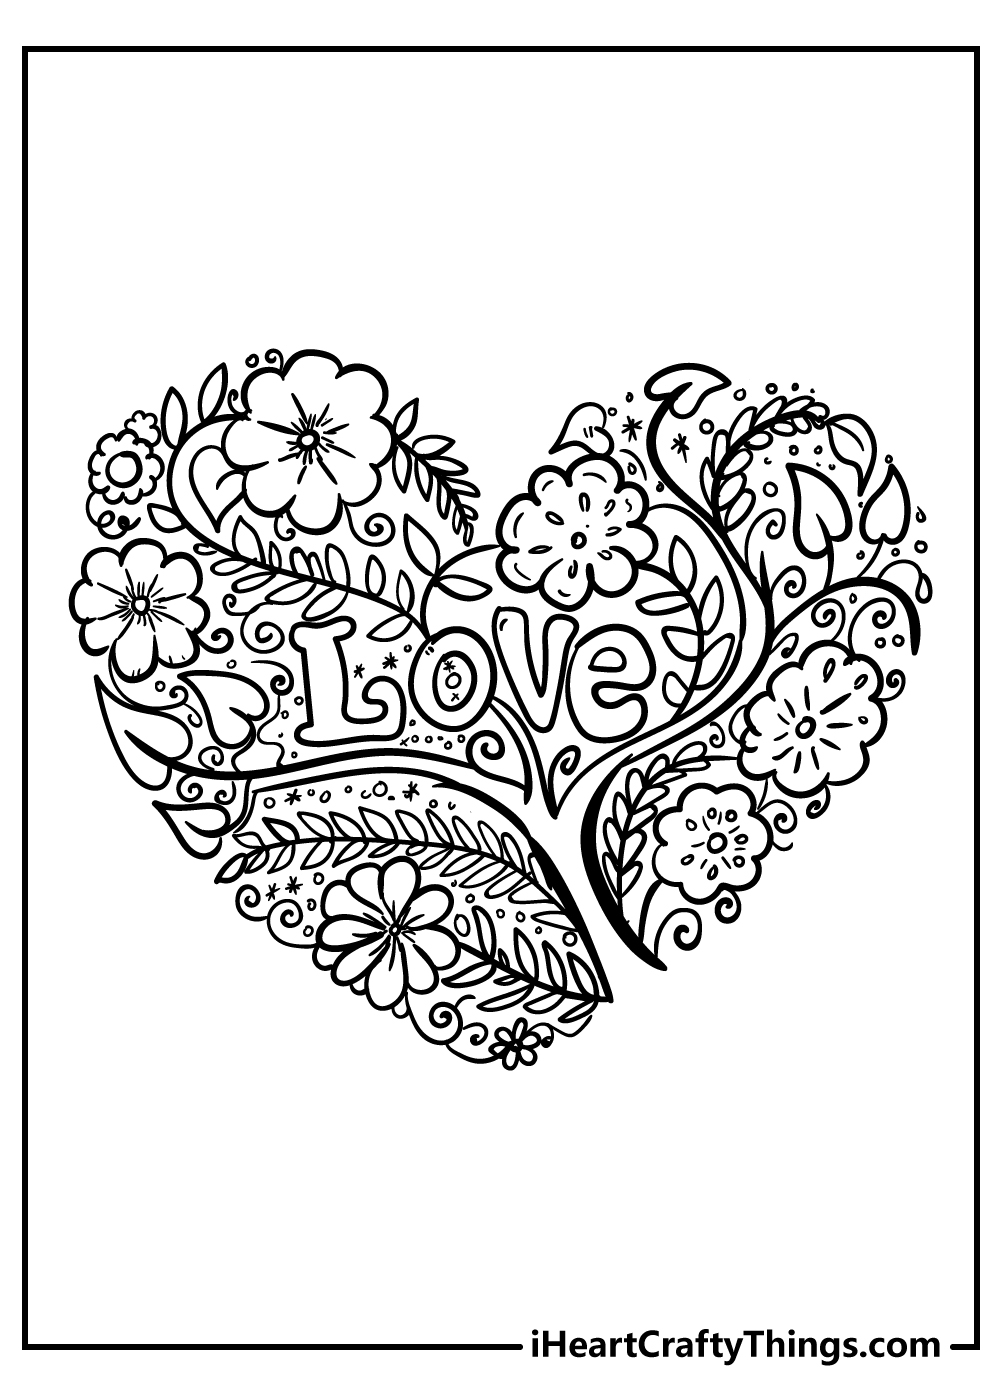 heart coloring original sheet for children free download